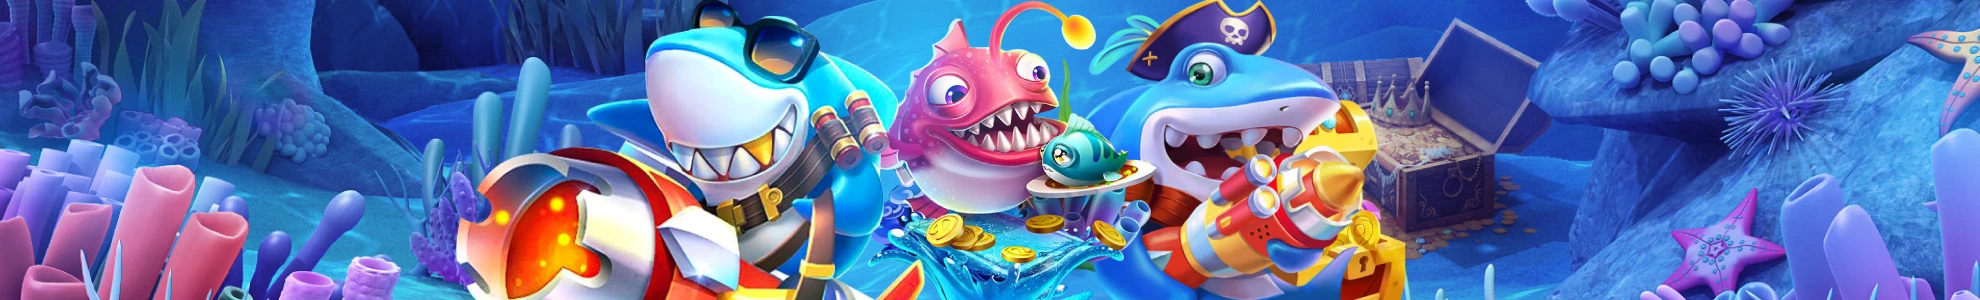 Online Casino Fishing Games